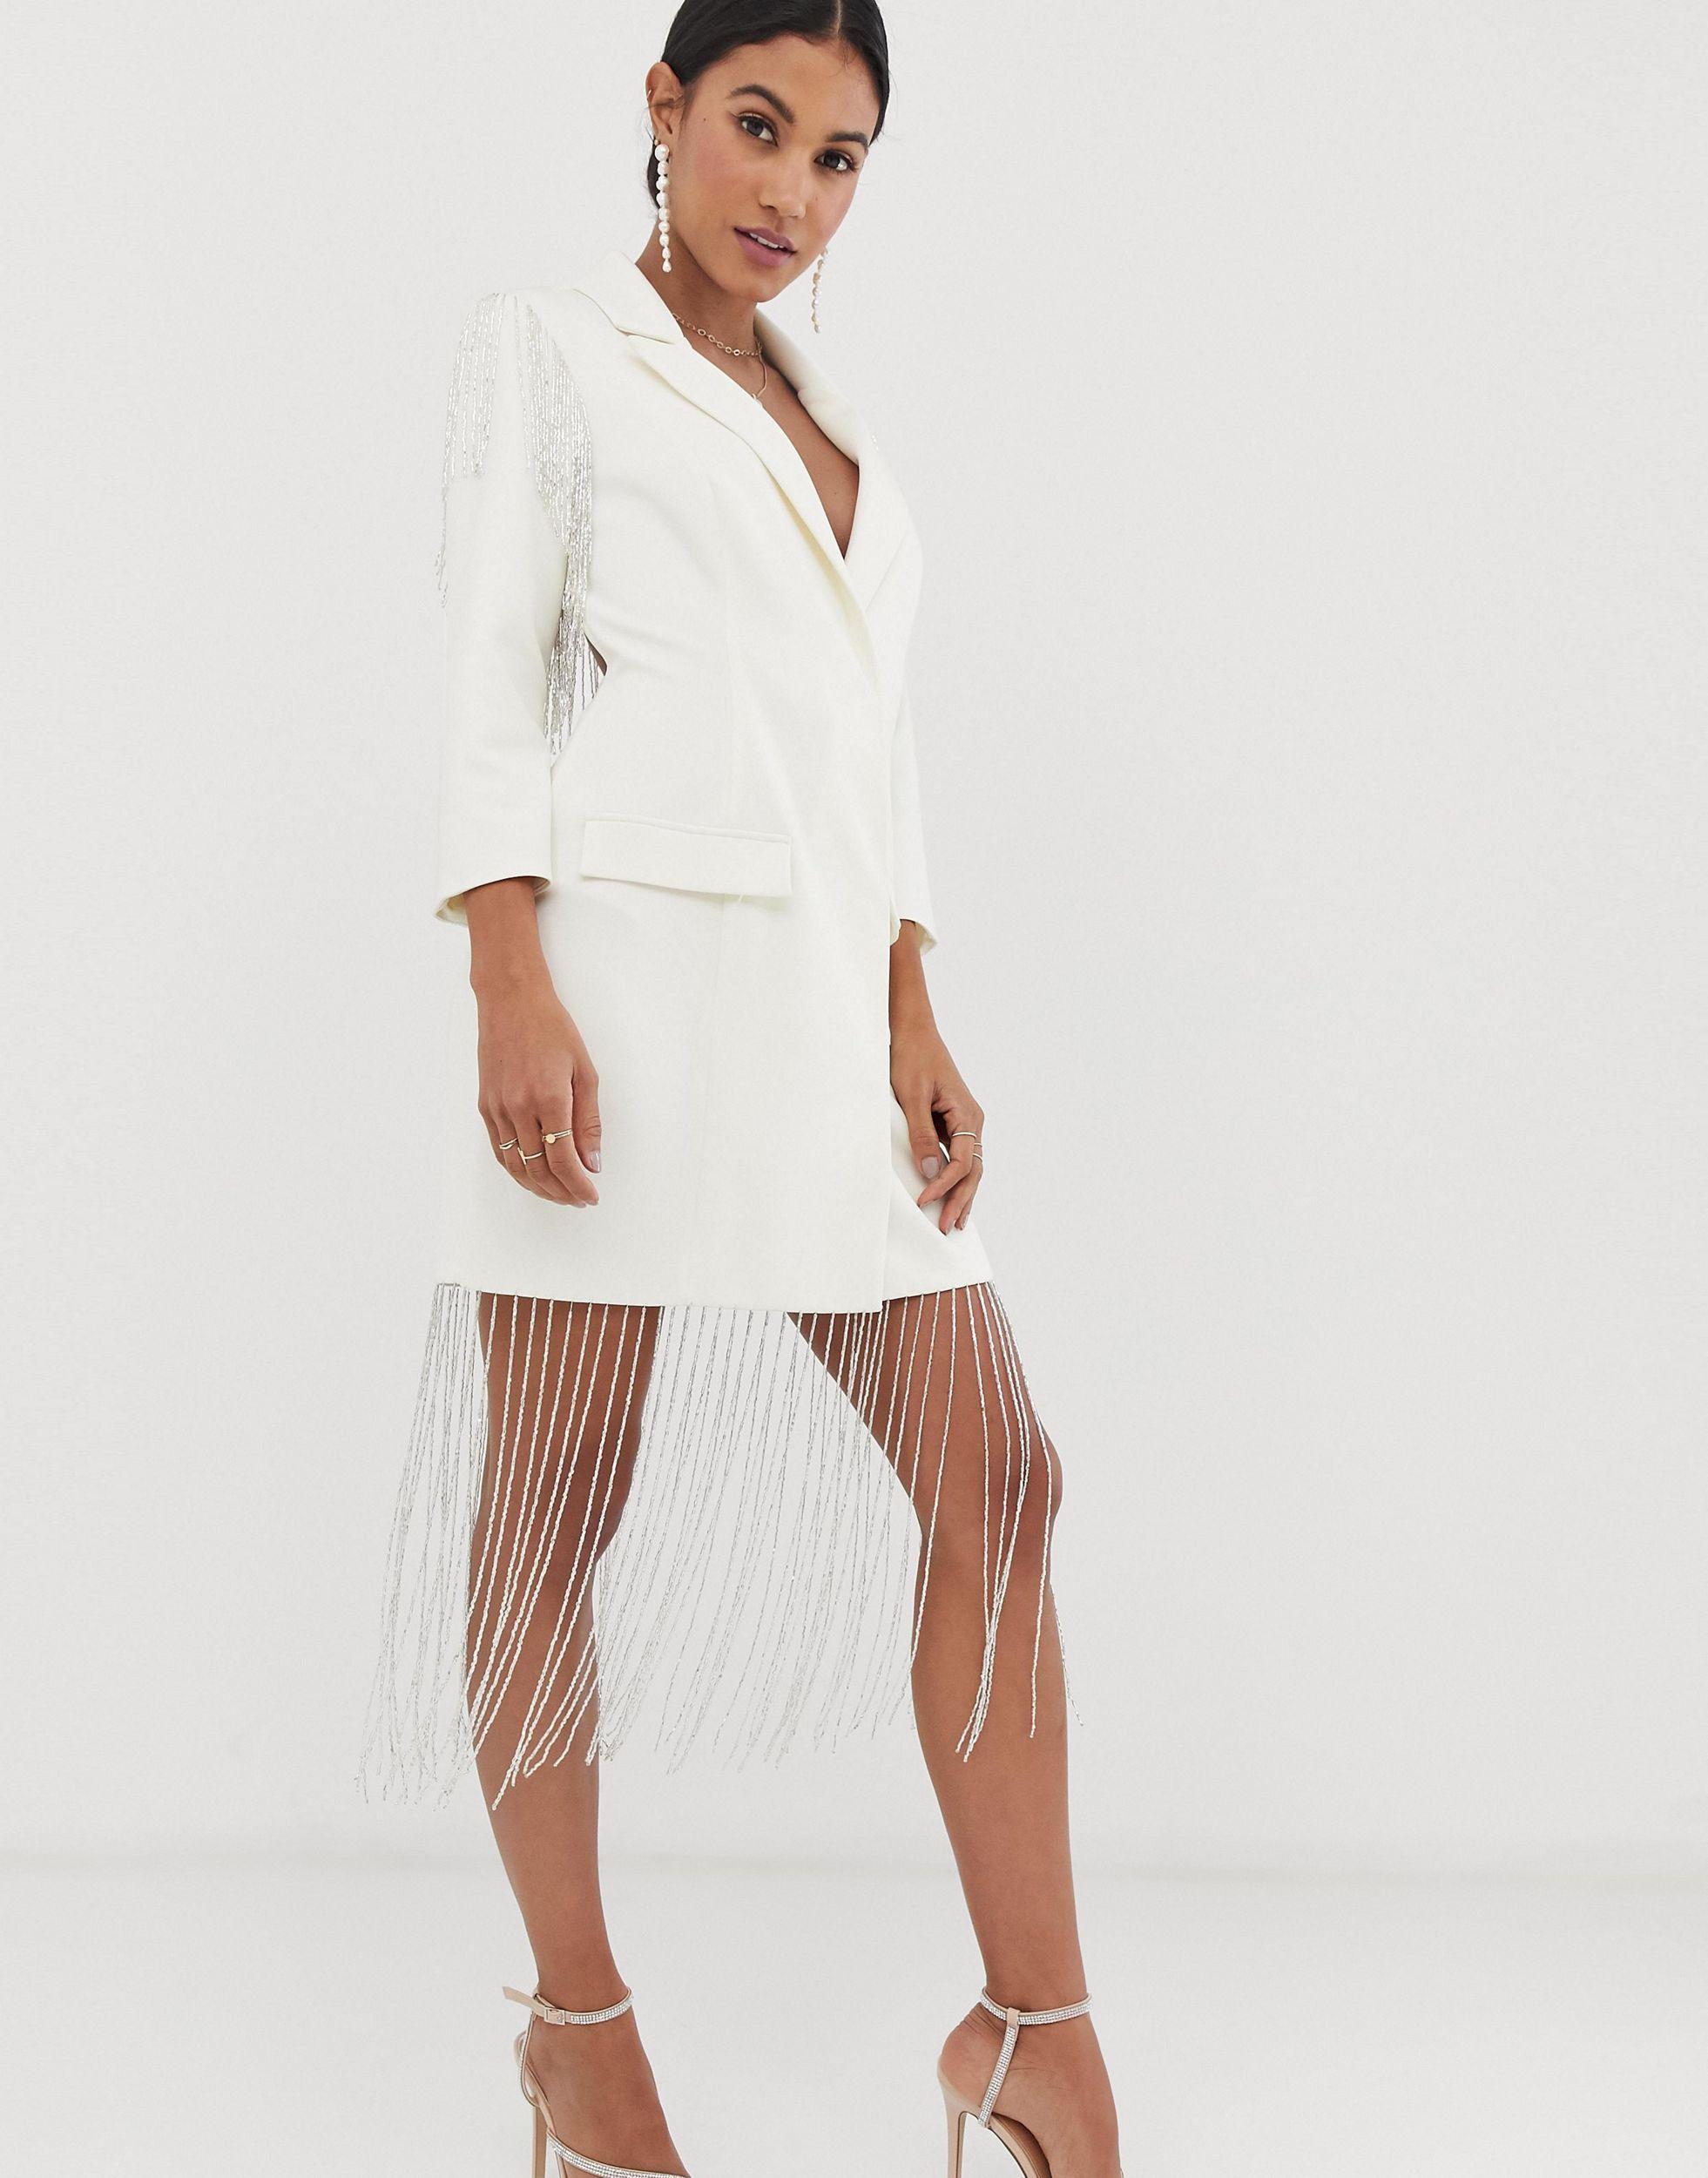 ASOS Synthetic Embellished Fringe Blazer Mini Dress in White - Lyst